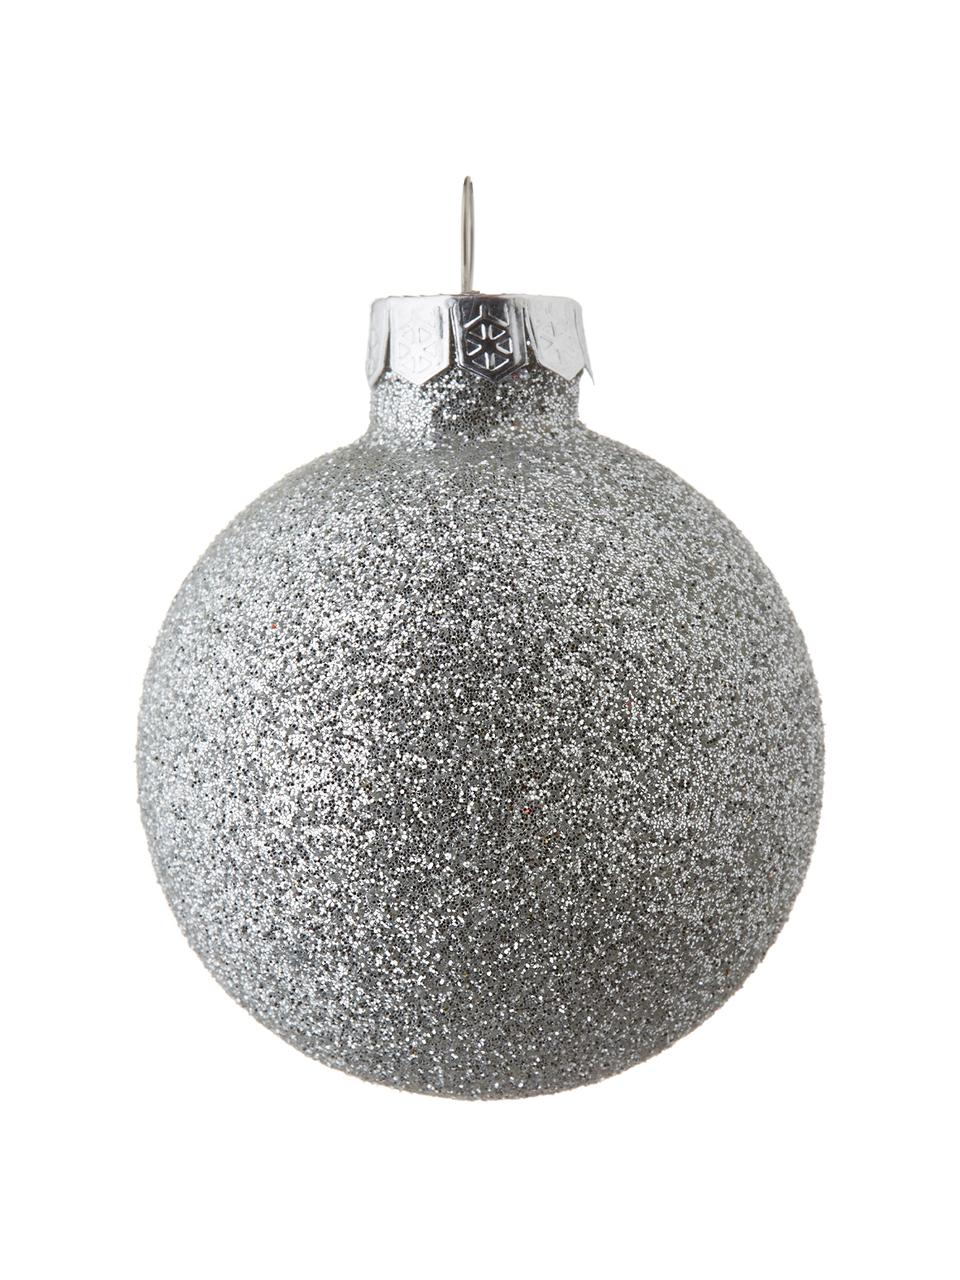 Bolas de Navidad Globe, 42 uds., Plata, transparente, Set de diferentes tamaños